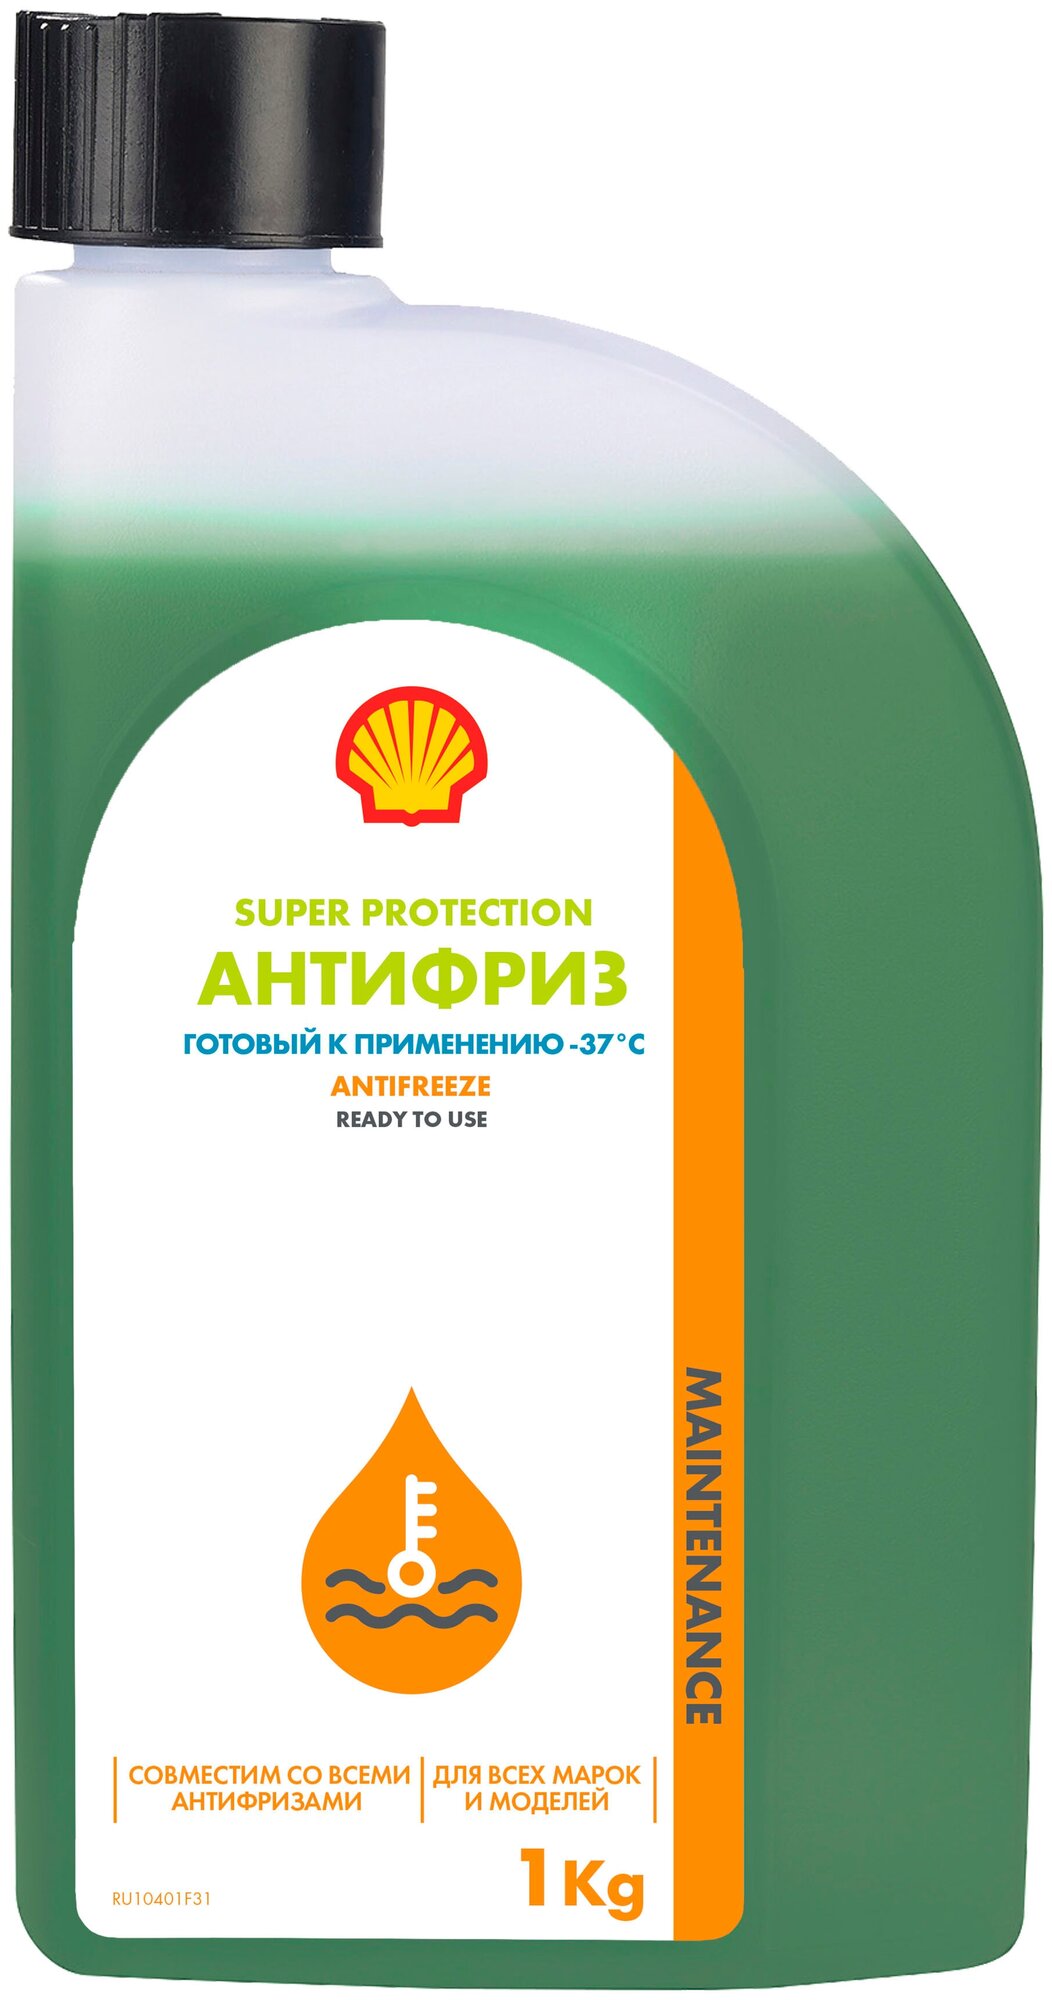 SHELL Антифриз зеленый G11 (1кг) Super protection (SHELL)